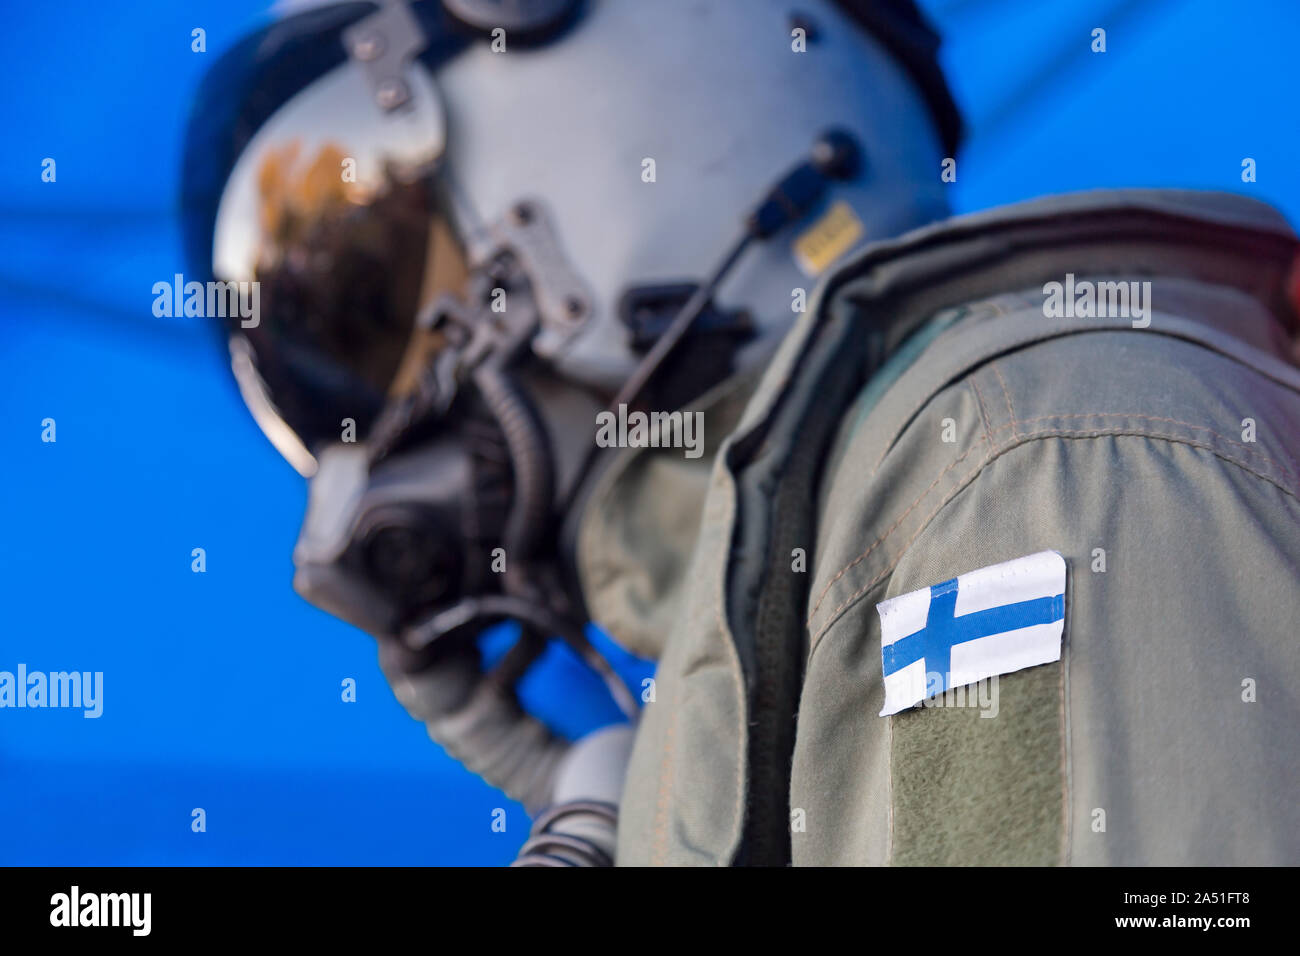 Air force pilot flight suit uniform with Finnish flag patch. Finland  military jet aircraft pilot Stock Photo - Alamy